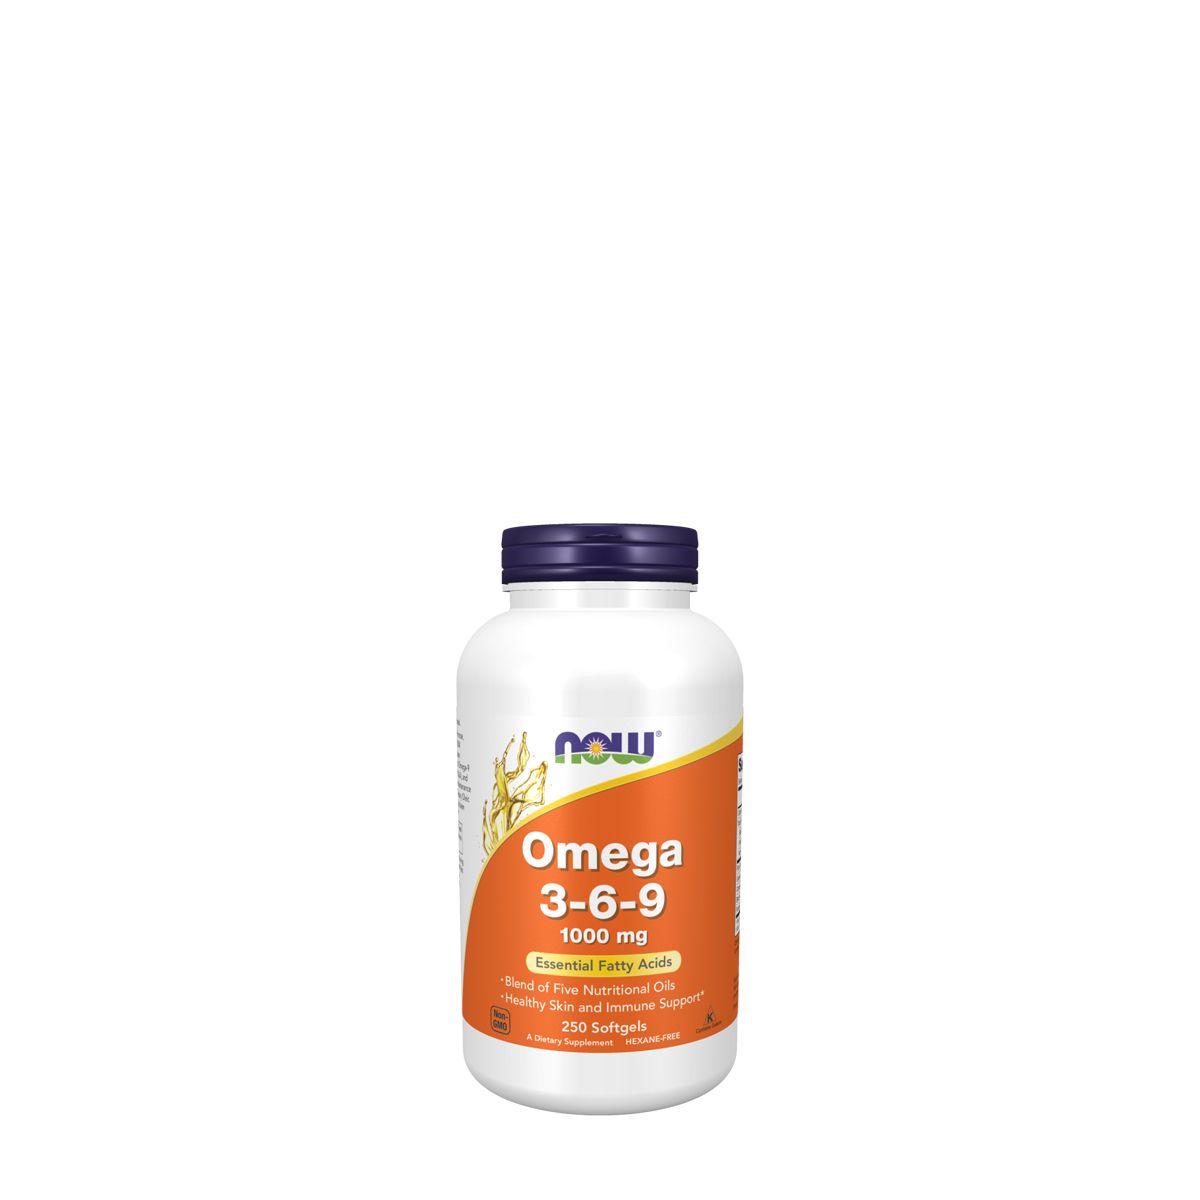 Omega 3-6-9 komplex 1000 mg, Now Omega 3-6-9, 250 kapszula